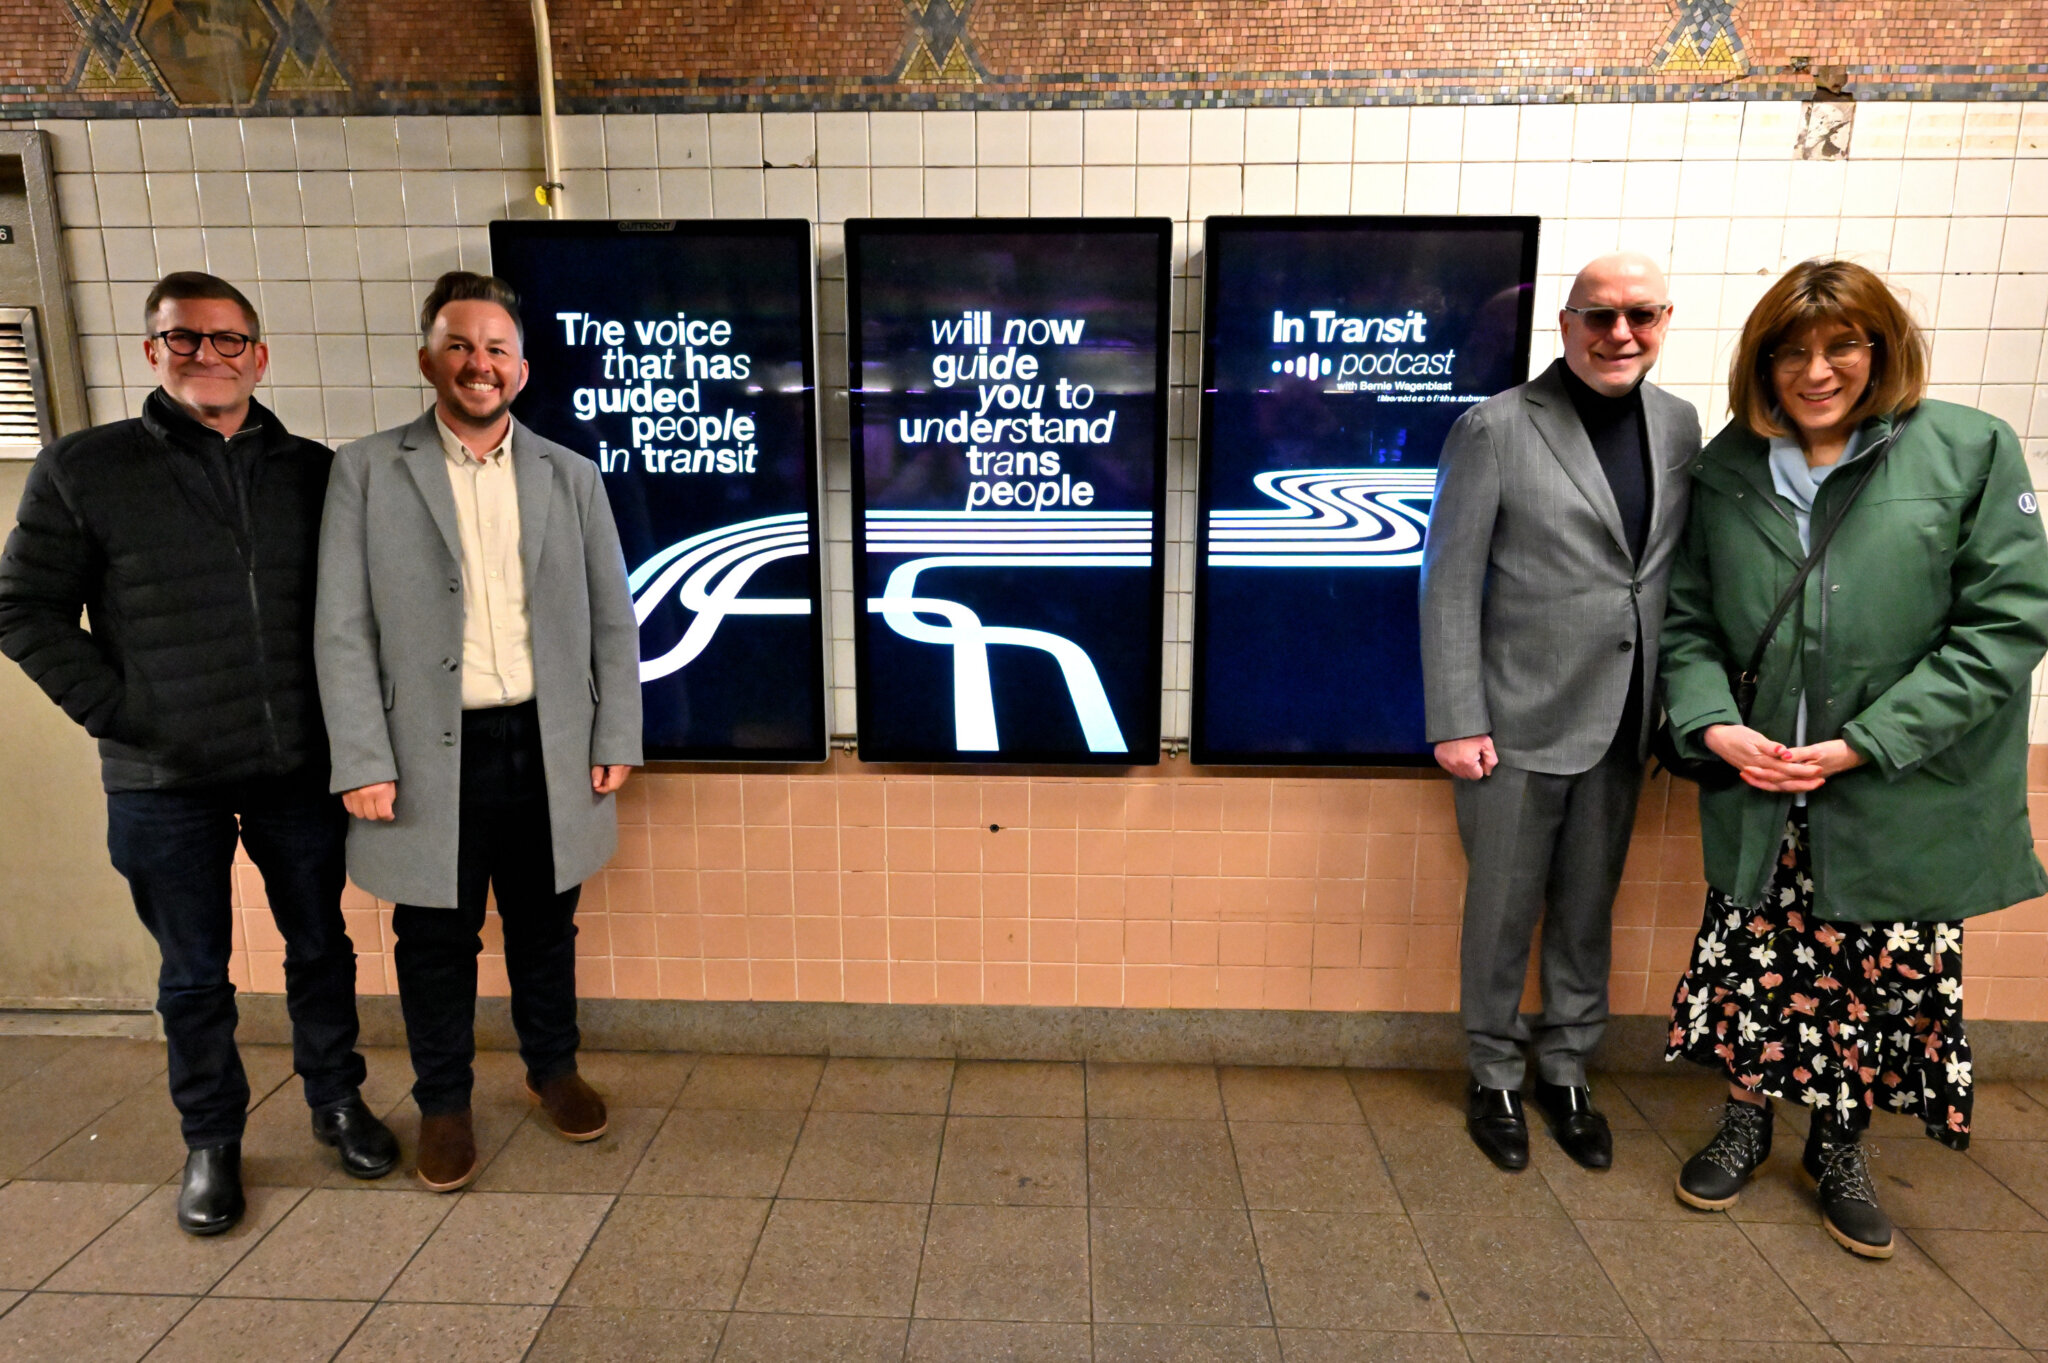 Ken Lustbader, Finn Brigham and Patrick McGovern, Bernie Wagenblast pose with billboard